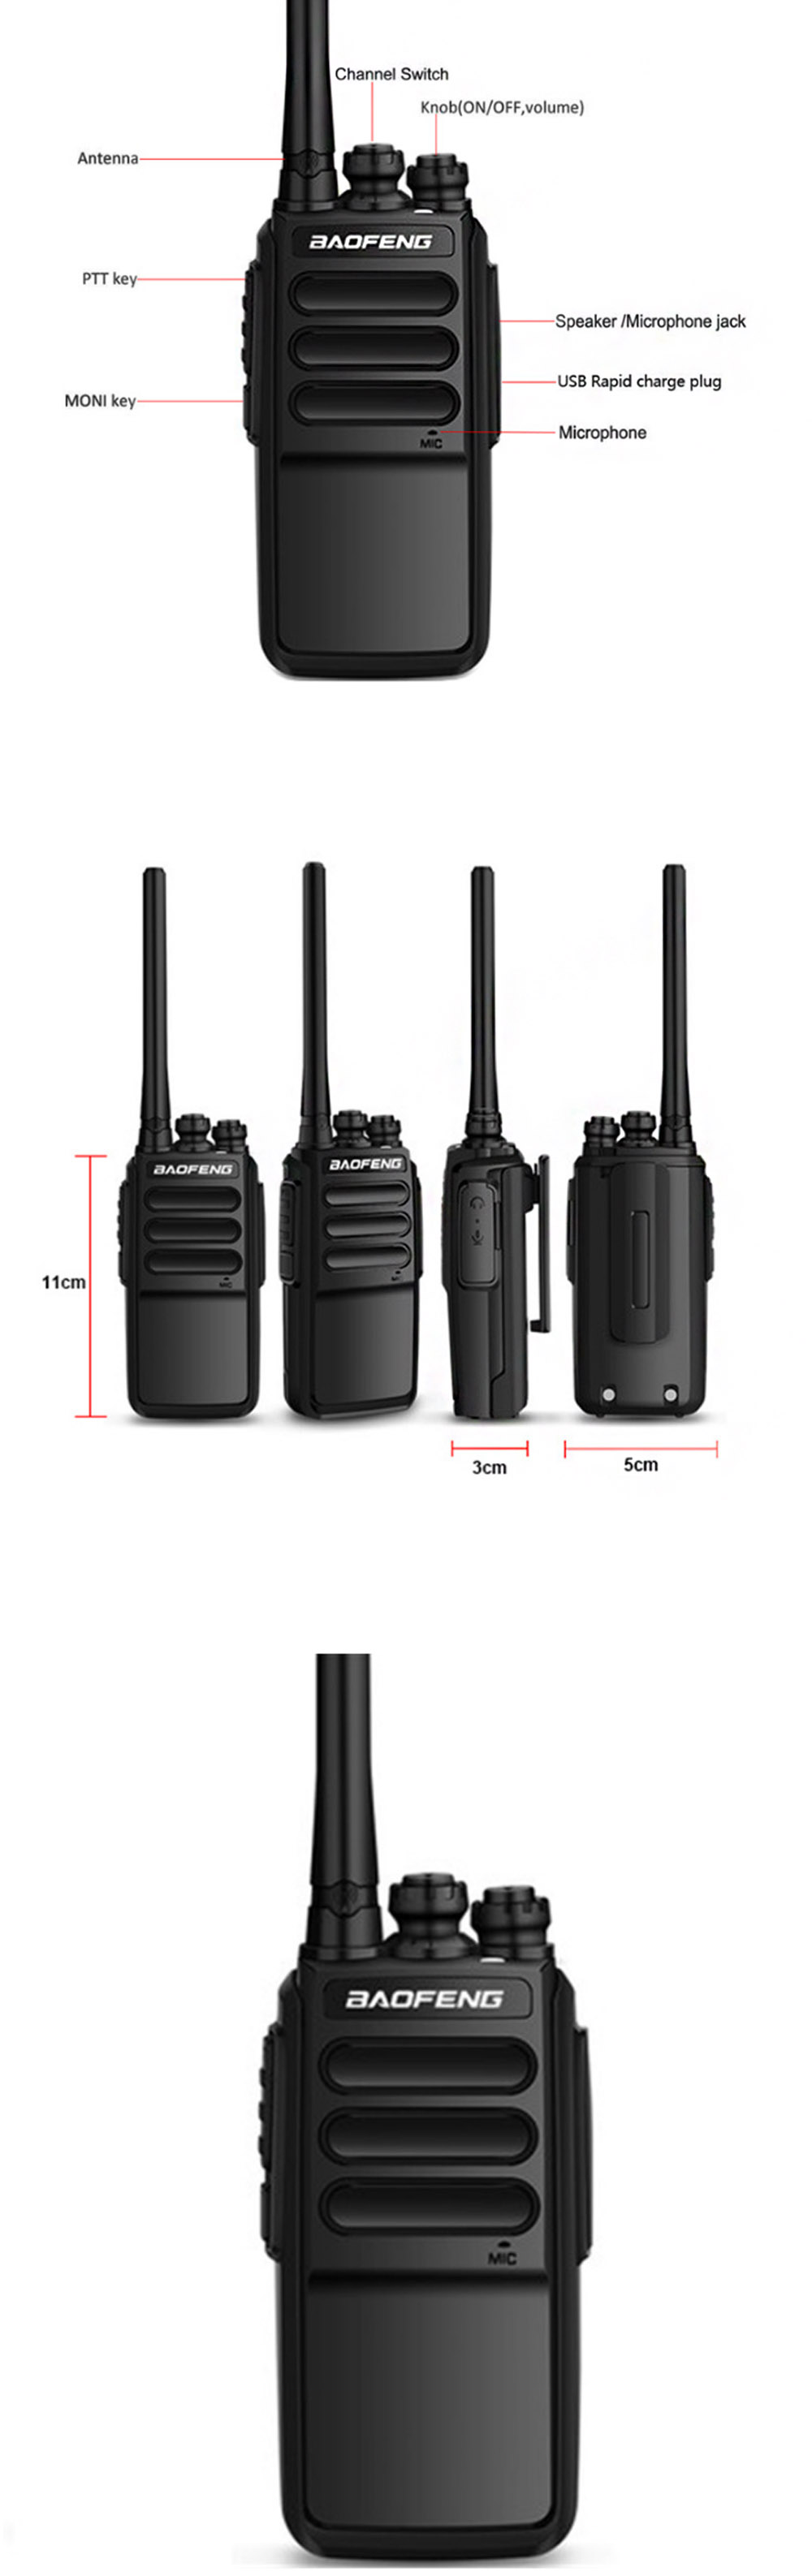 BAOFENG-BF-C3-5W-2800mAh-Walkie-Talkie-400-470MHz-1-3km-16-Channels-Dual-Band-Two-way-Handheld-Radio-1752213